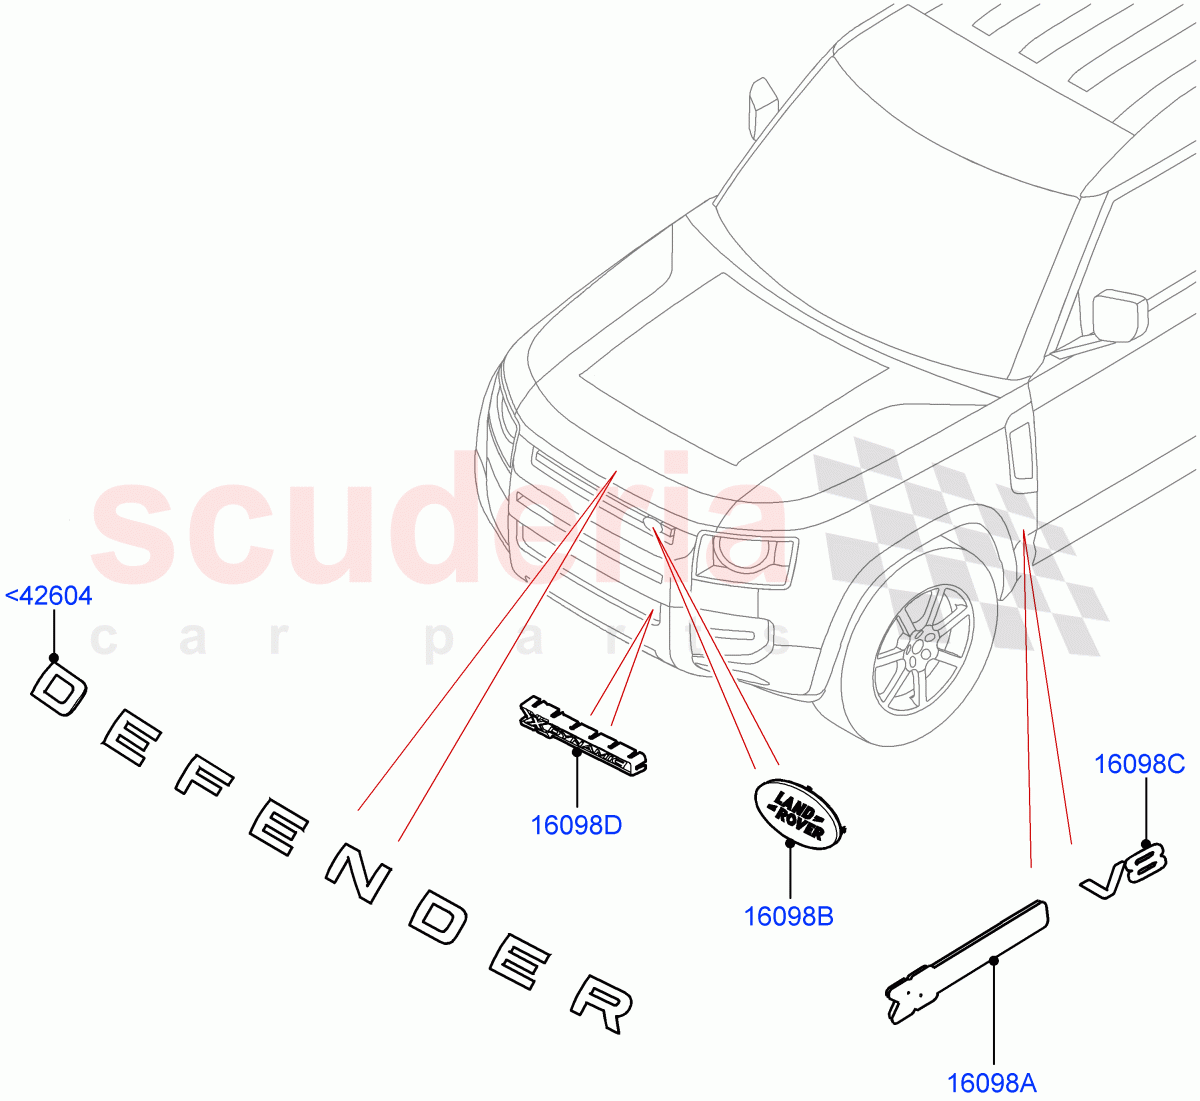 Name Plates(Front) of Land Rover Land Rover Defender (2020+) [3.0 I6 Turbo Diesel AJ20D6]